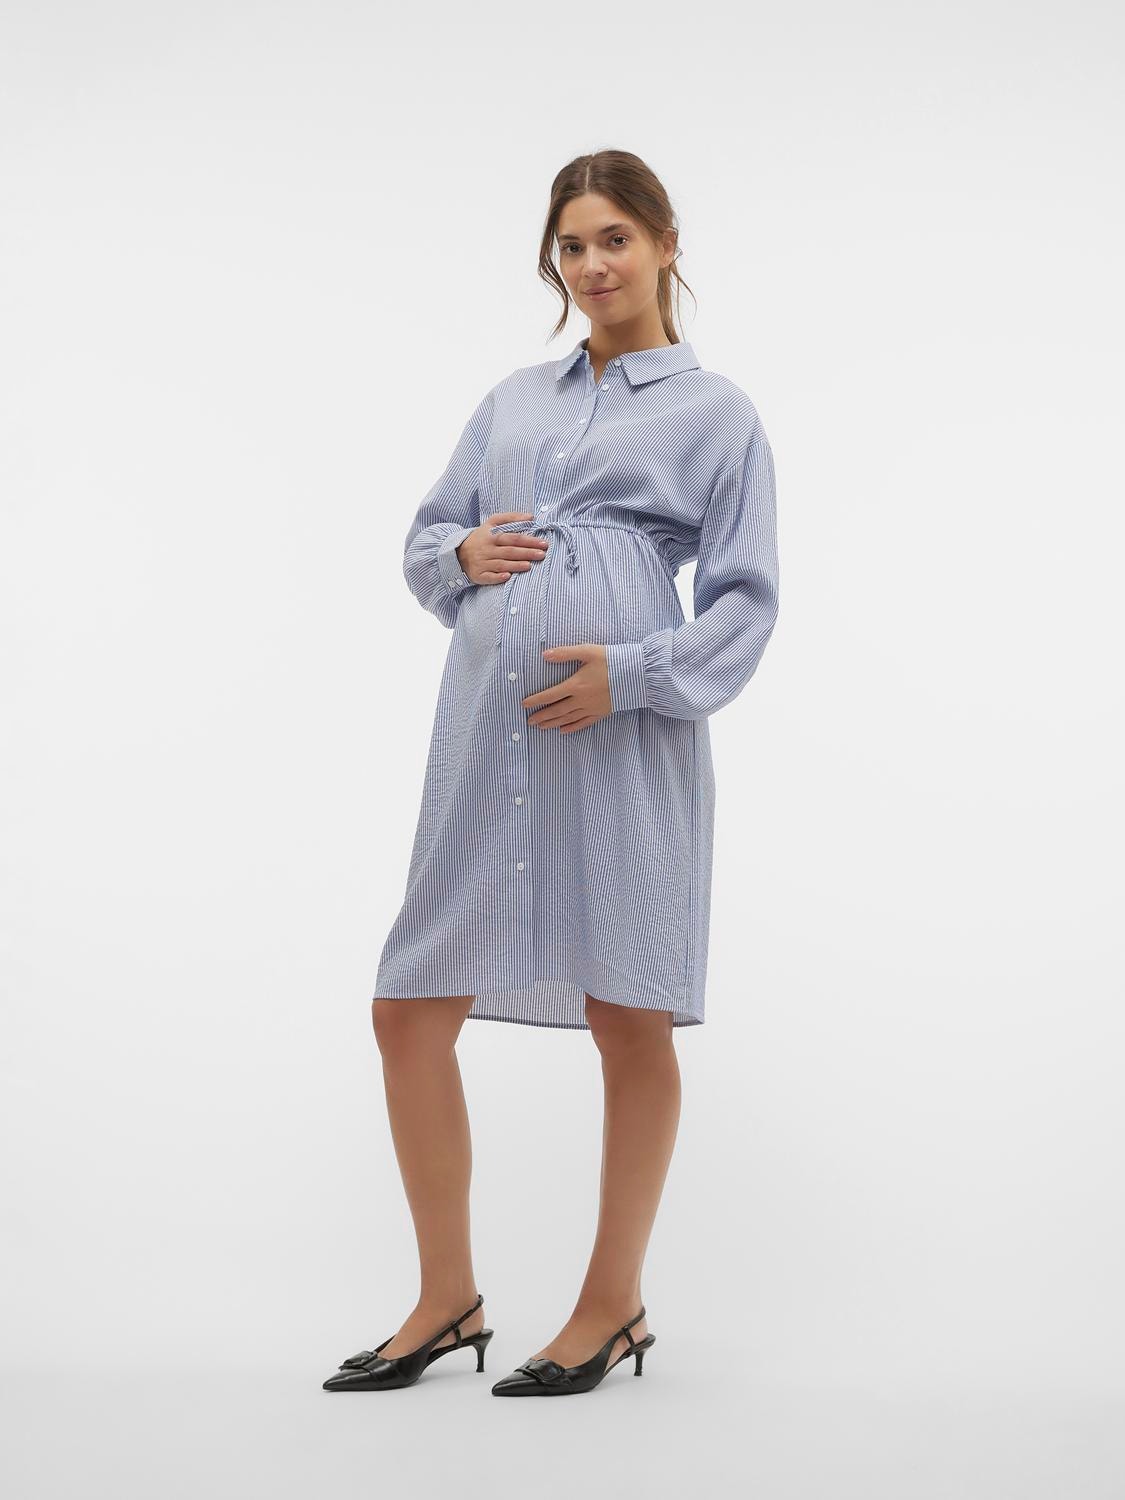 Buy Mamalicious Grey Maternity Button Front Comfort Night Dress